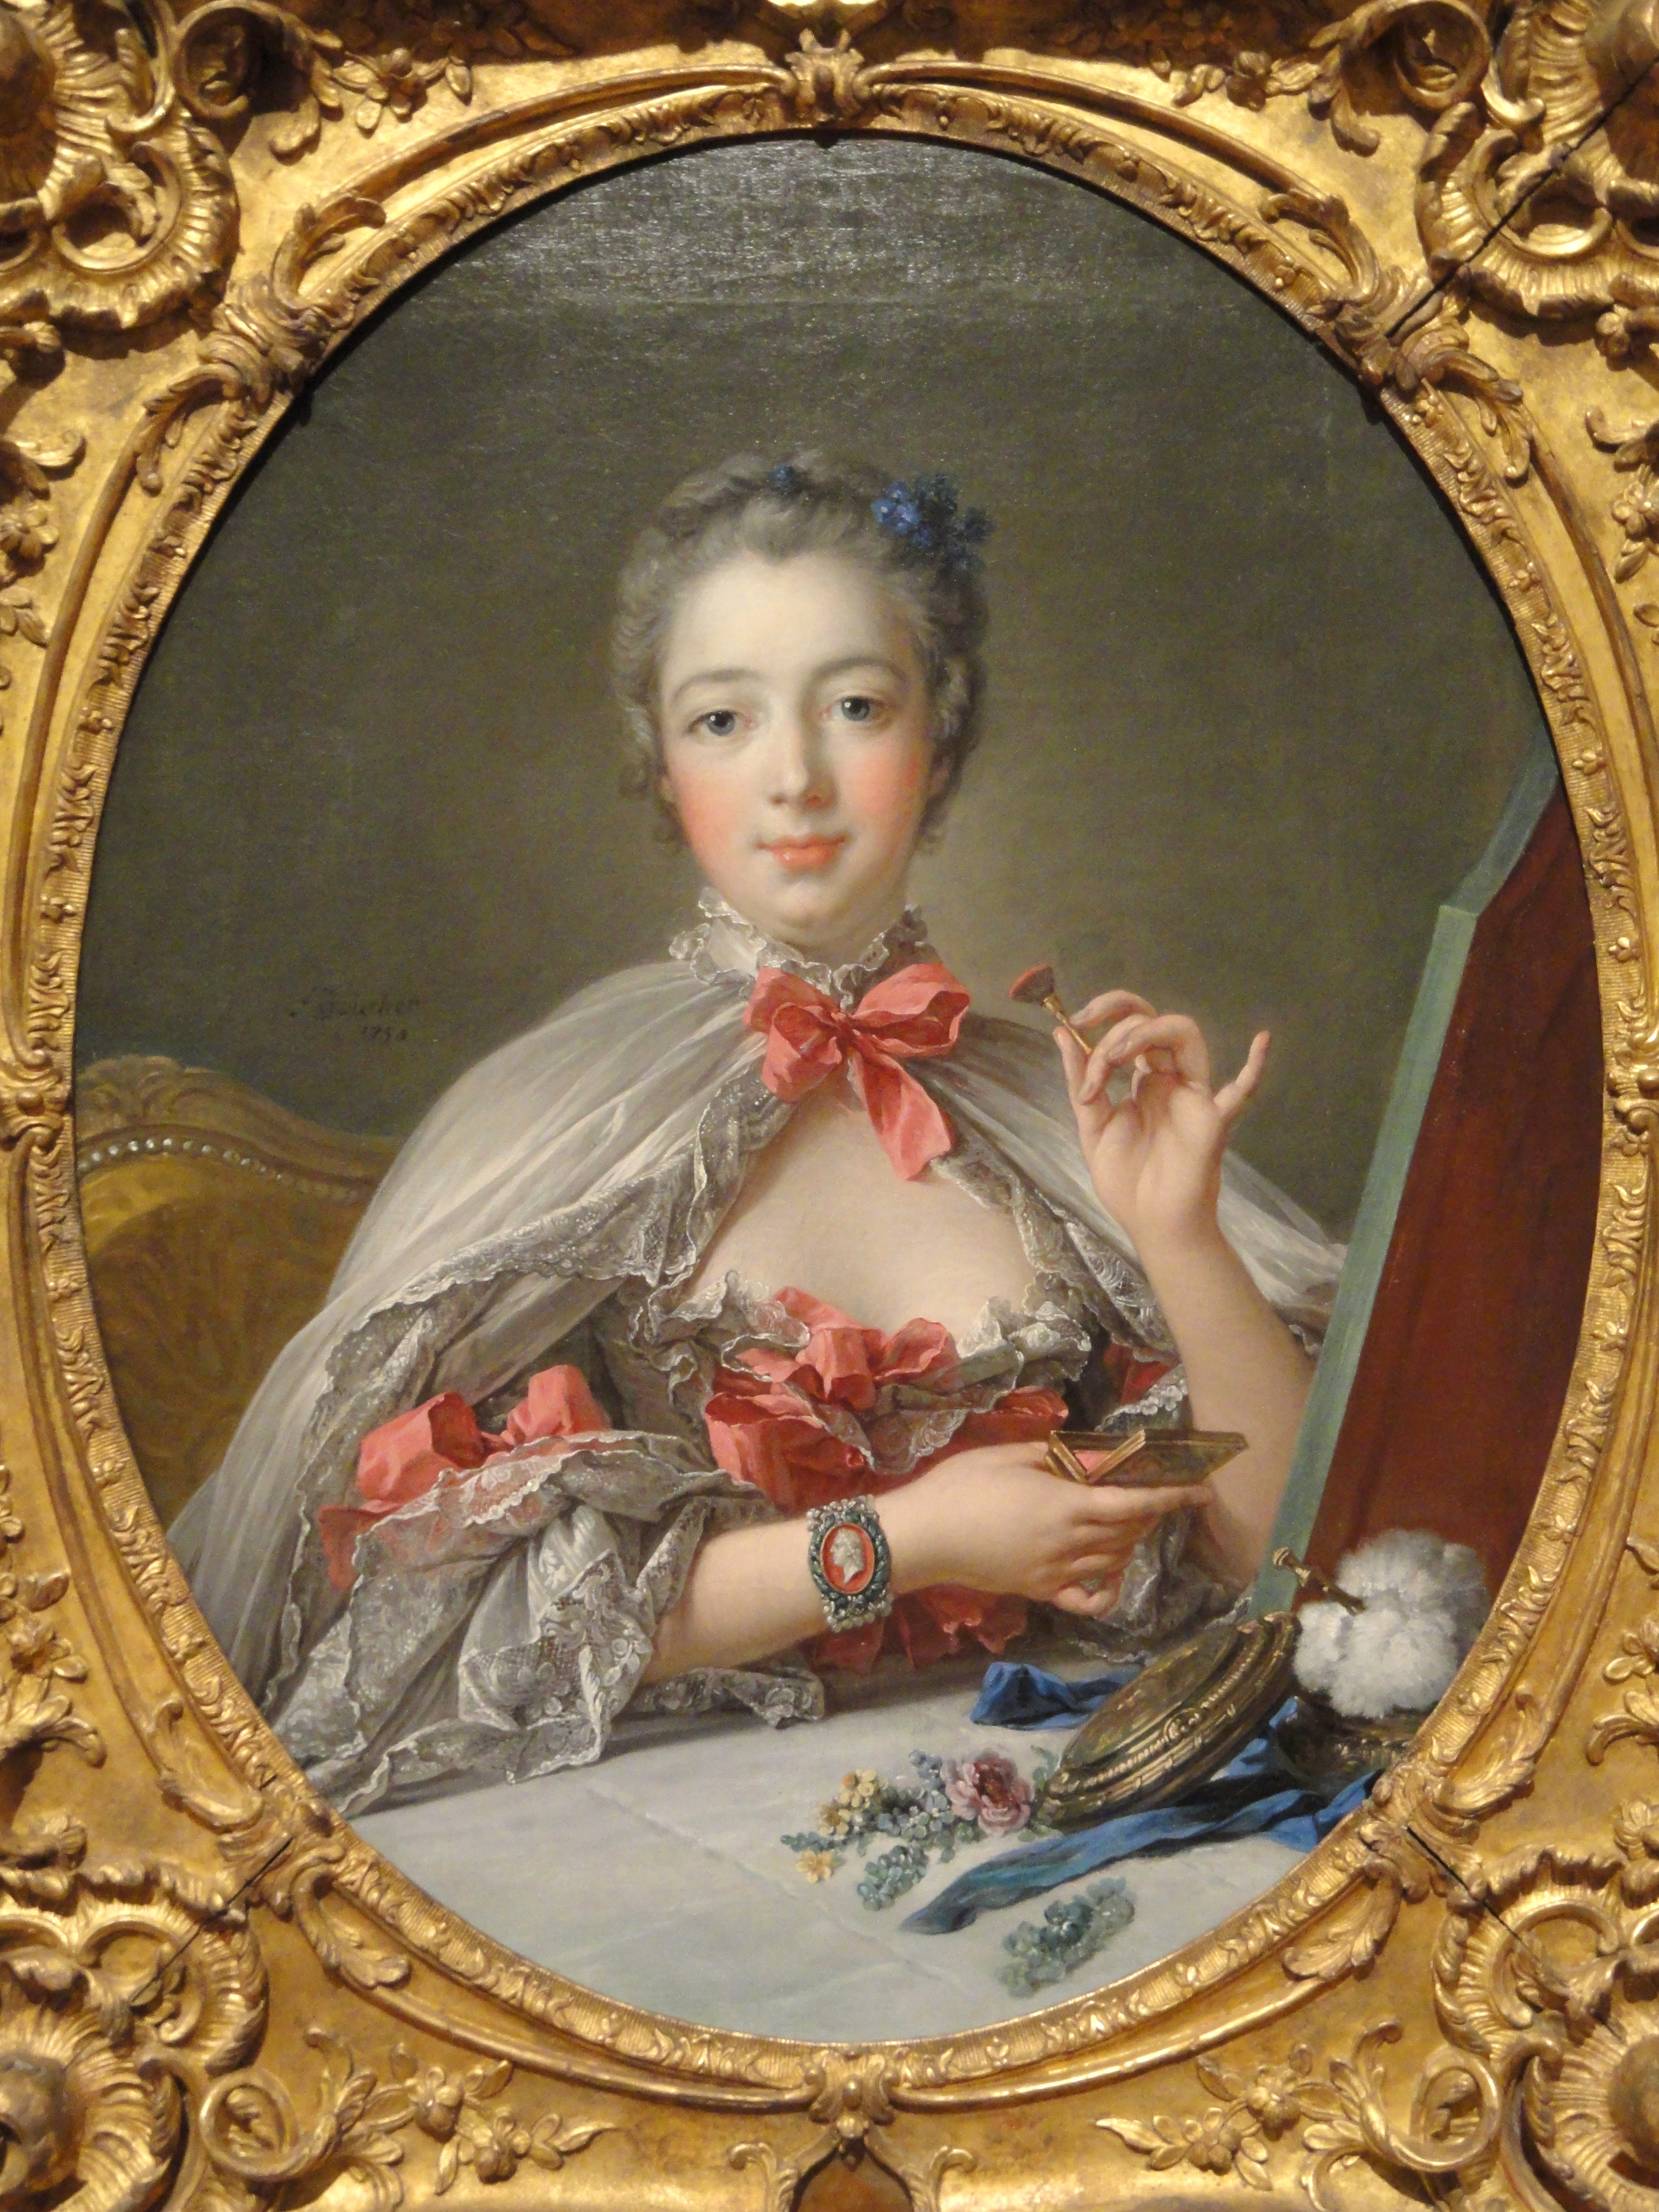 eanne-Antoinette Poisson, Marquise de Pompadour, by Francois Boucher, 1750 displayed in the Fogg Art Museum, Harvard University, Cambridge, Massachusetts, USA. Image: Daderot / Wikimedia Commons 